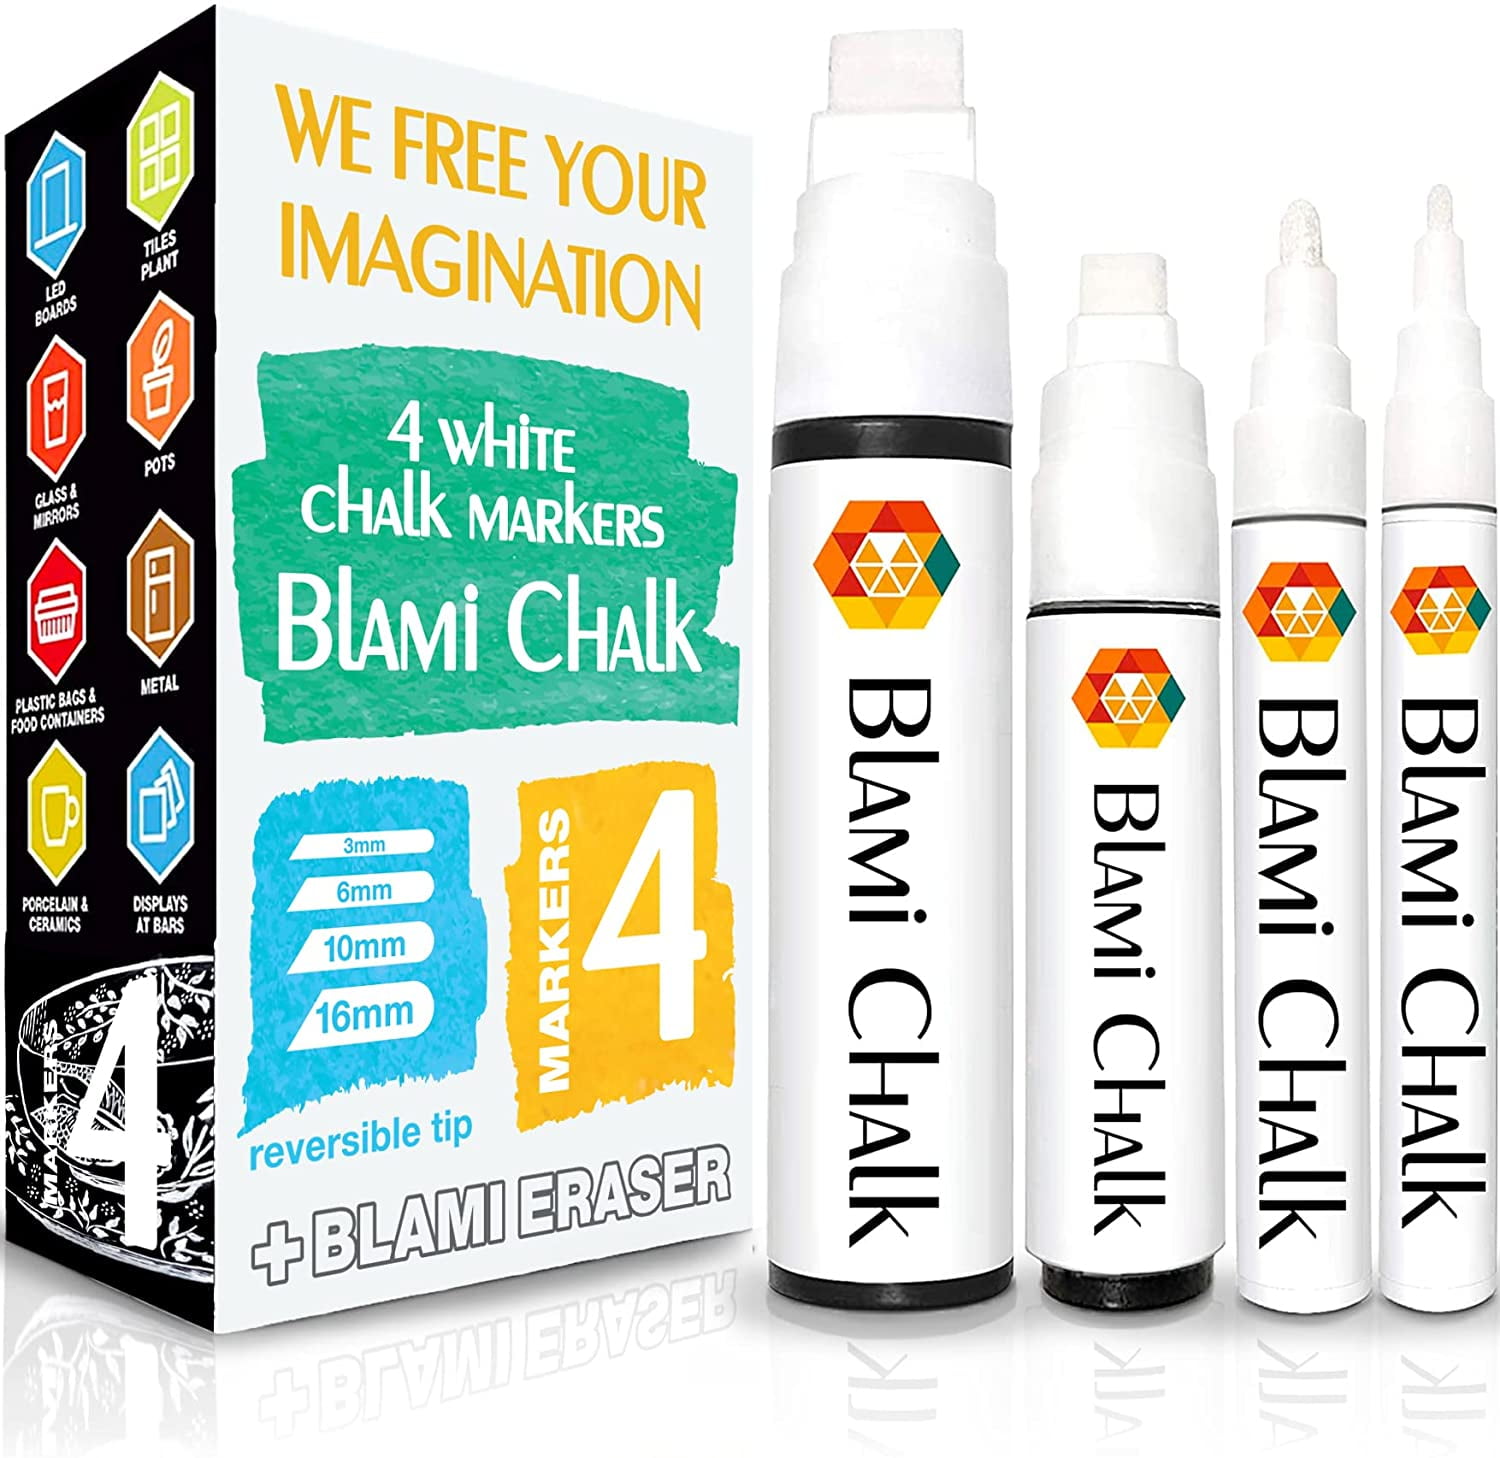 5 White Chalkboard Chalk Markers - White Dry Erase Marker for Blackboard, Chalkboard Signs, Windows, Glass | Variety Pack - Fine & Jumbo Size Ink